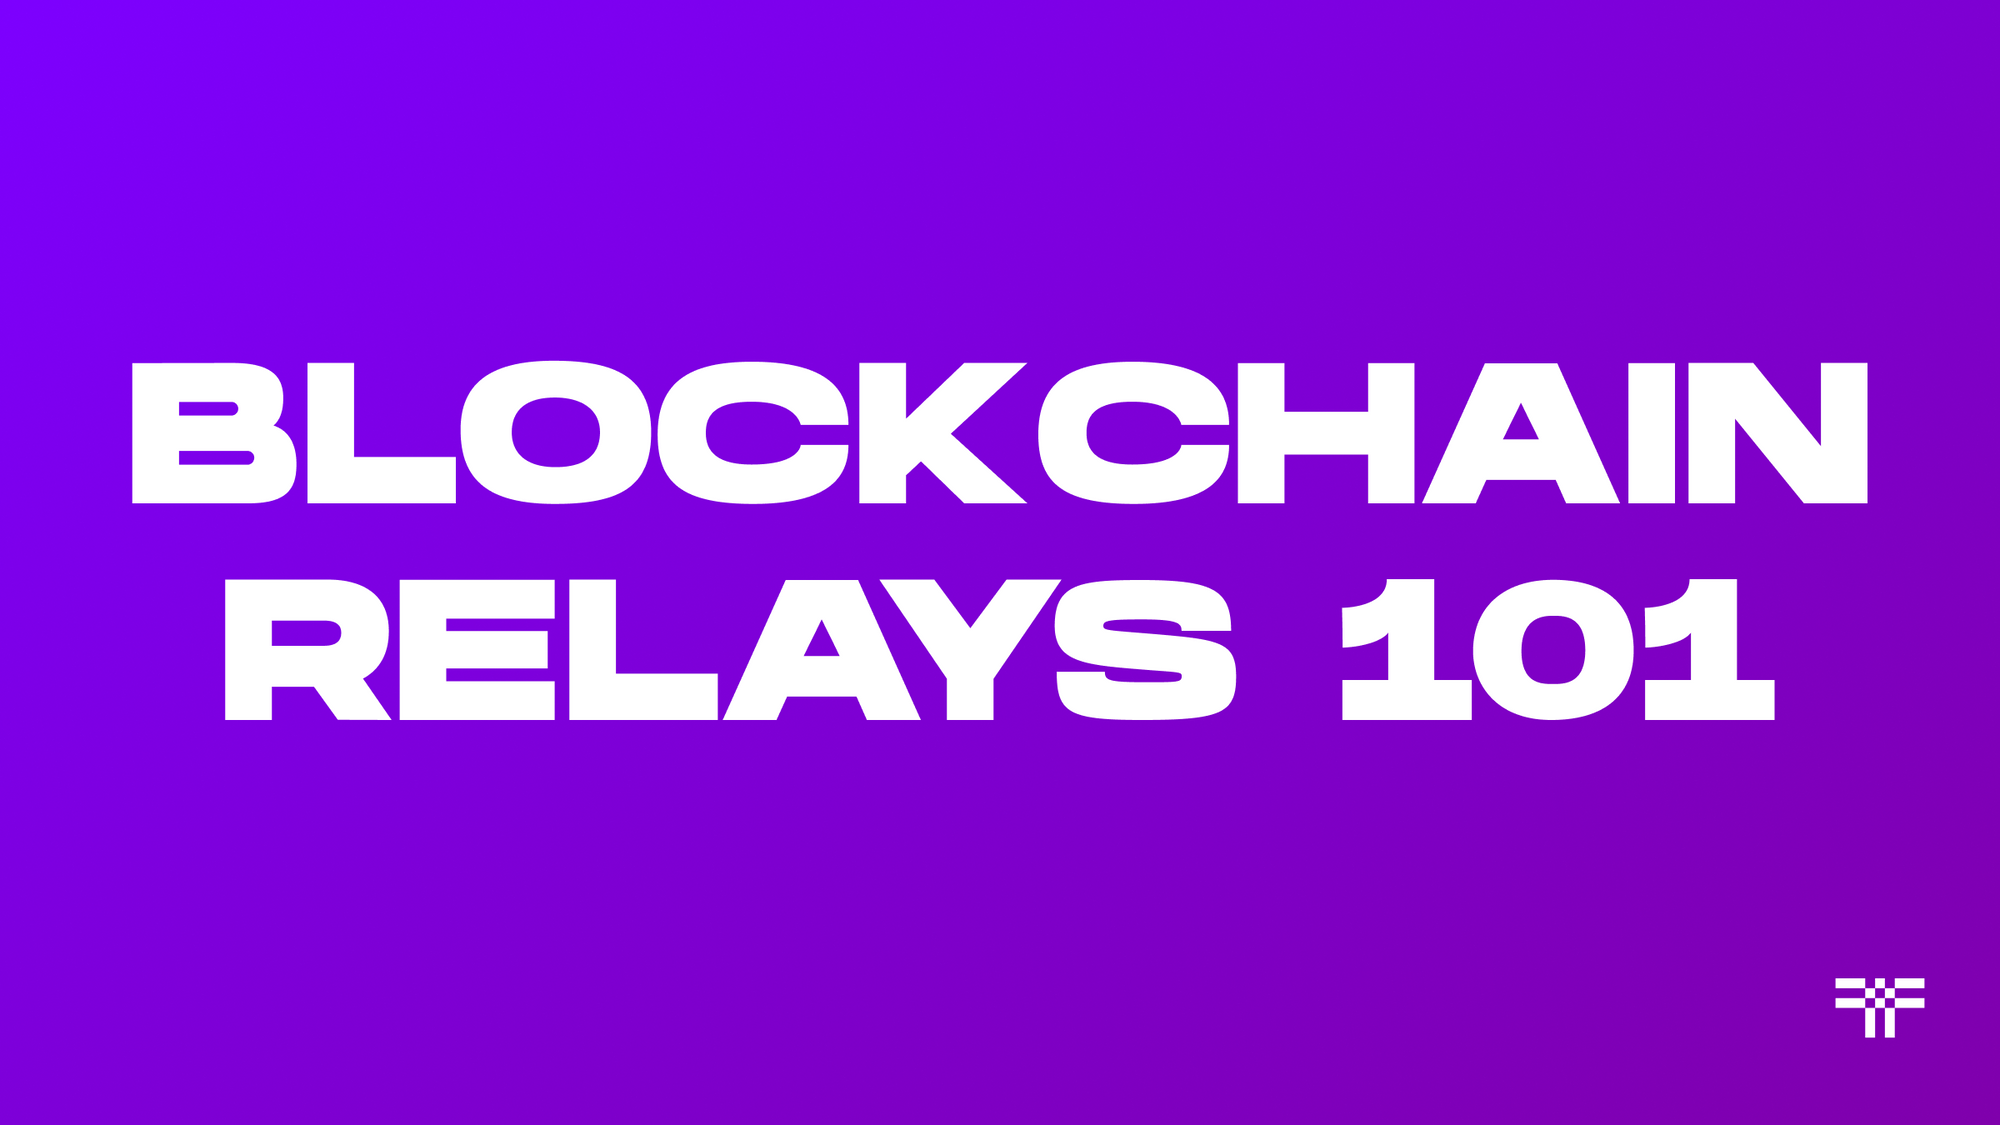 Blockchain Relays 101